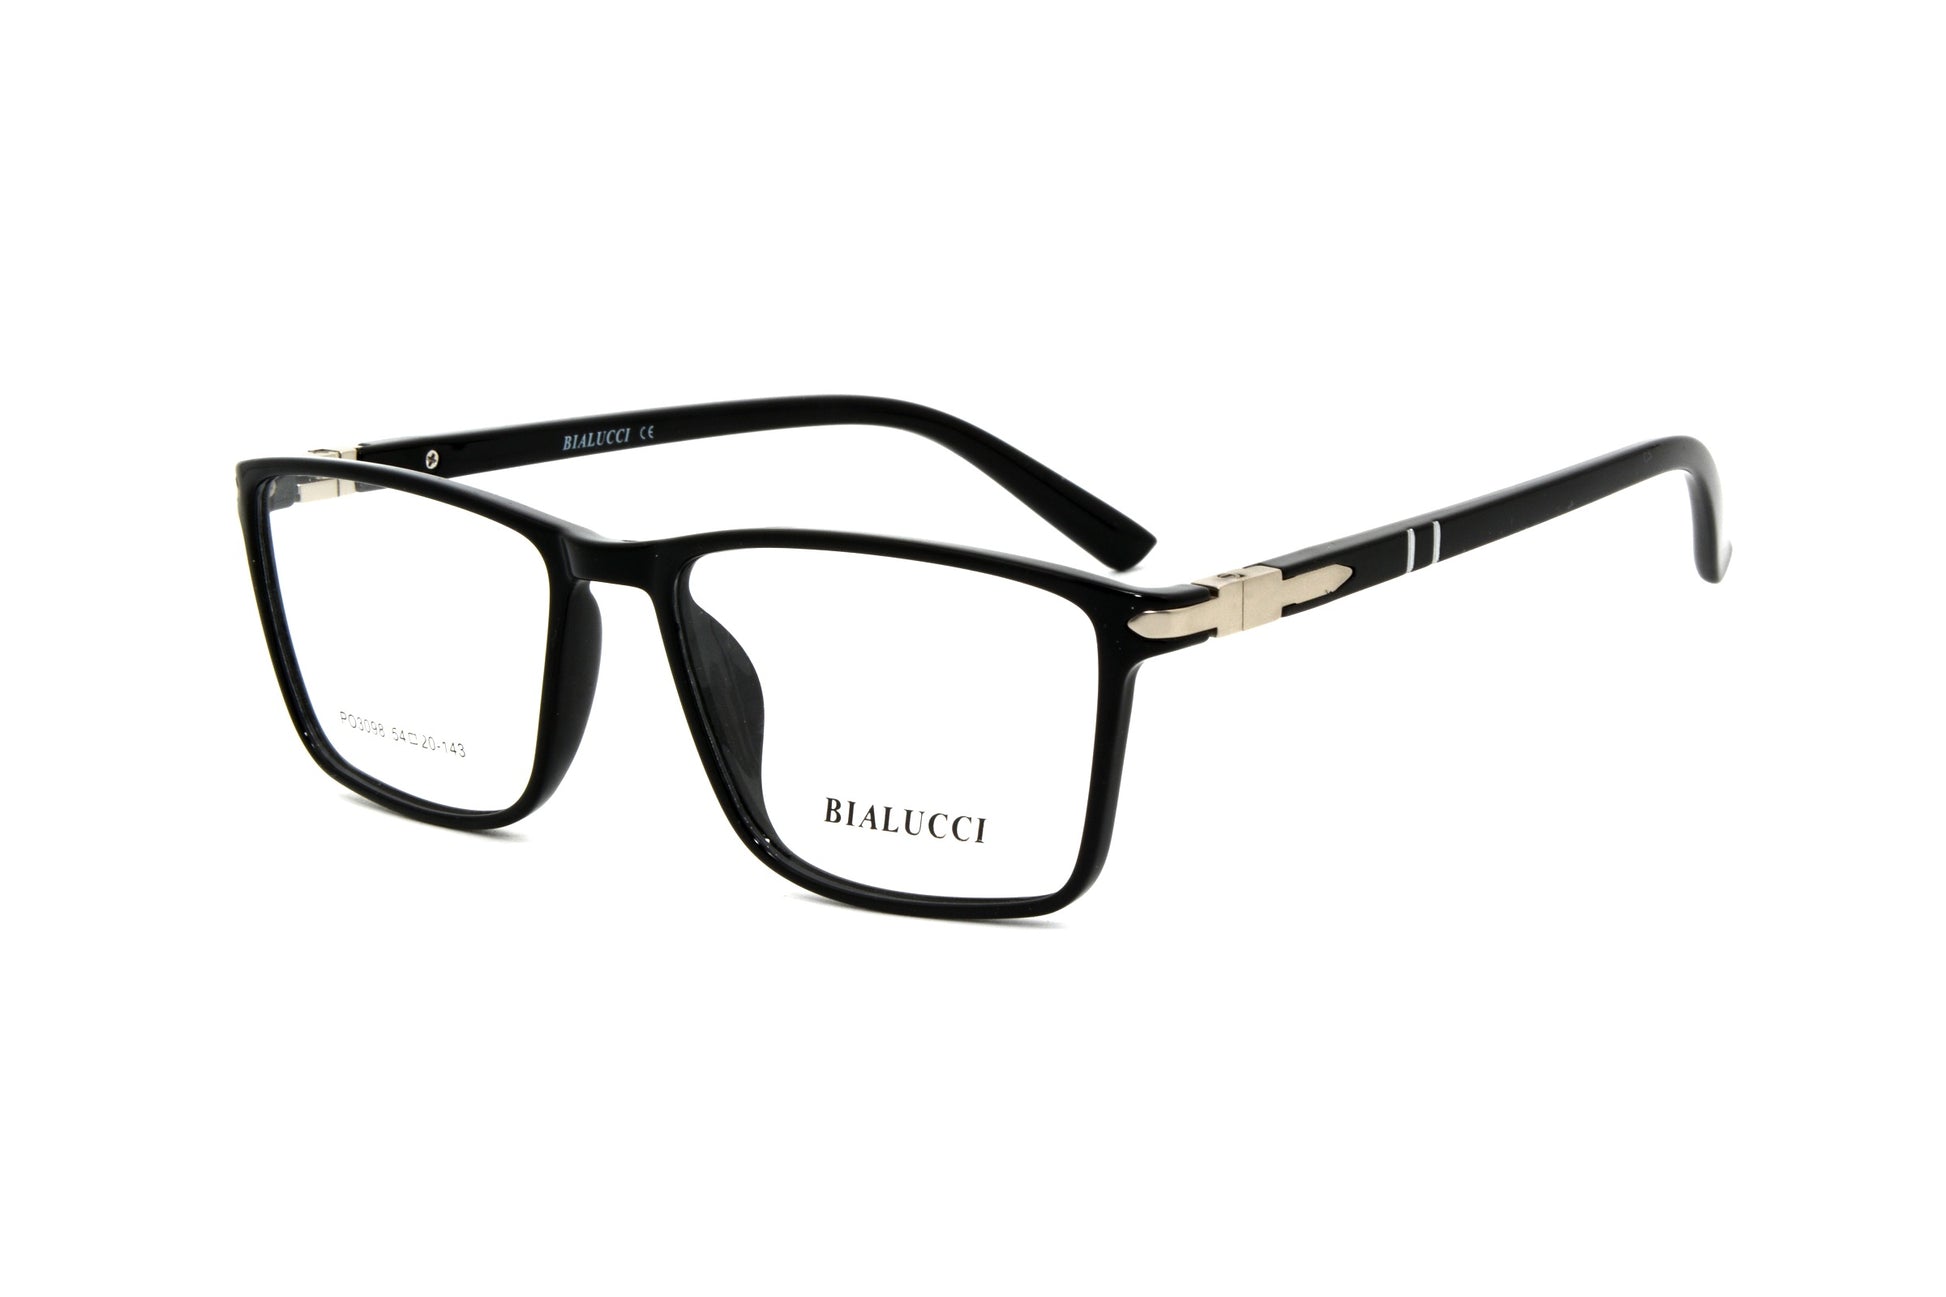 Bialucci eyewear PO 3098 C1